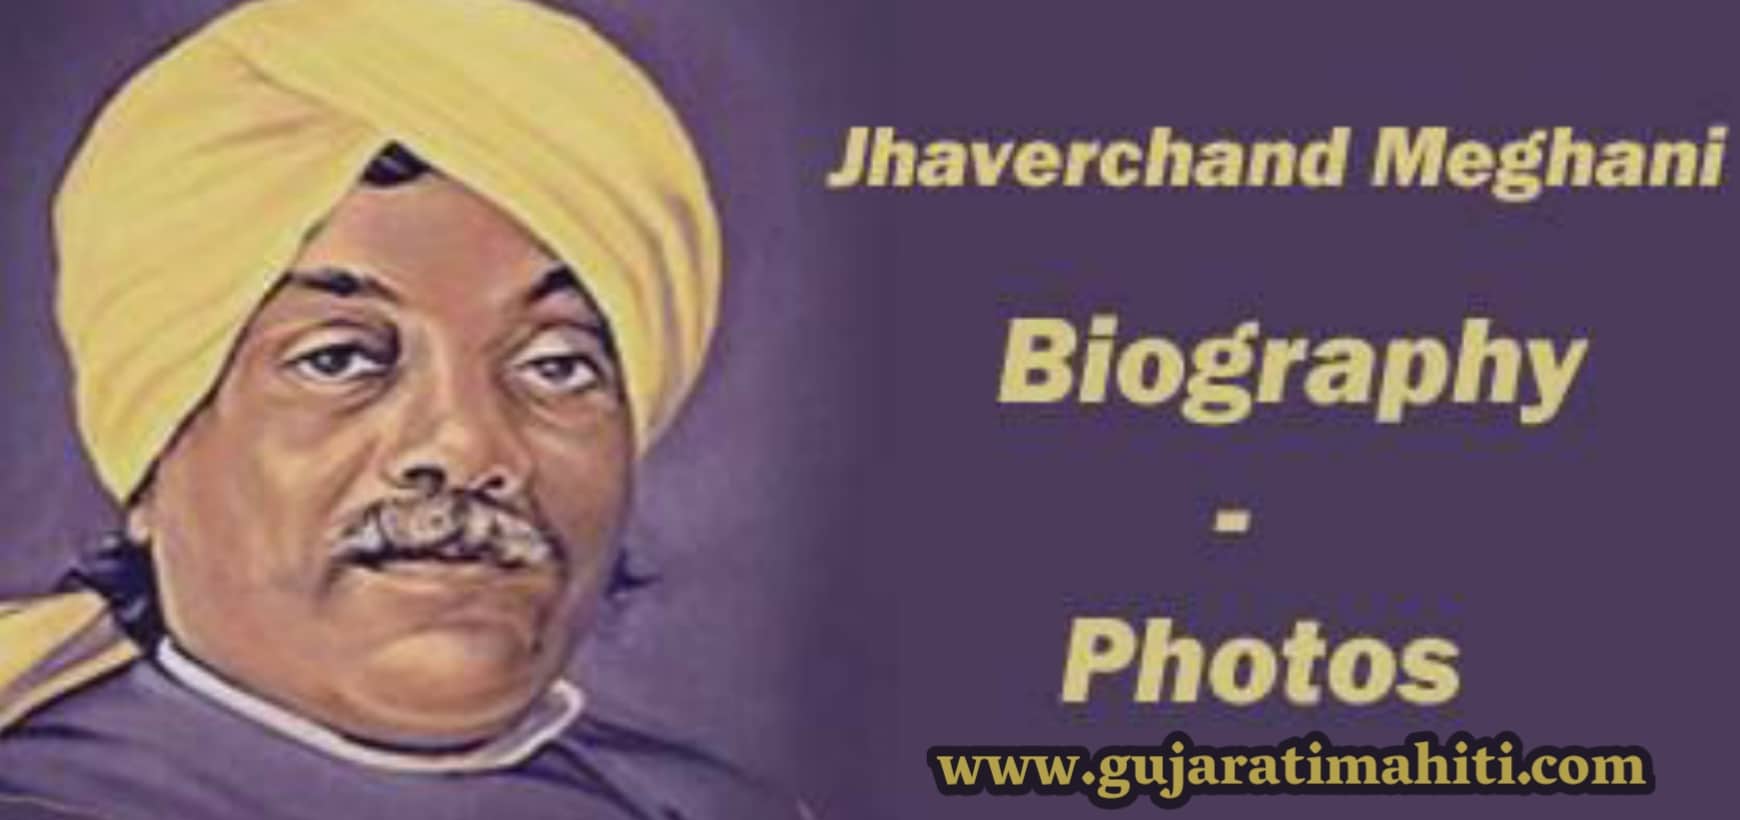 jhaverchand-meghani-biography-in-gujarati-GUJARATIMAHITI